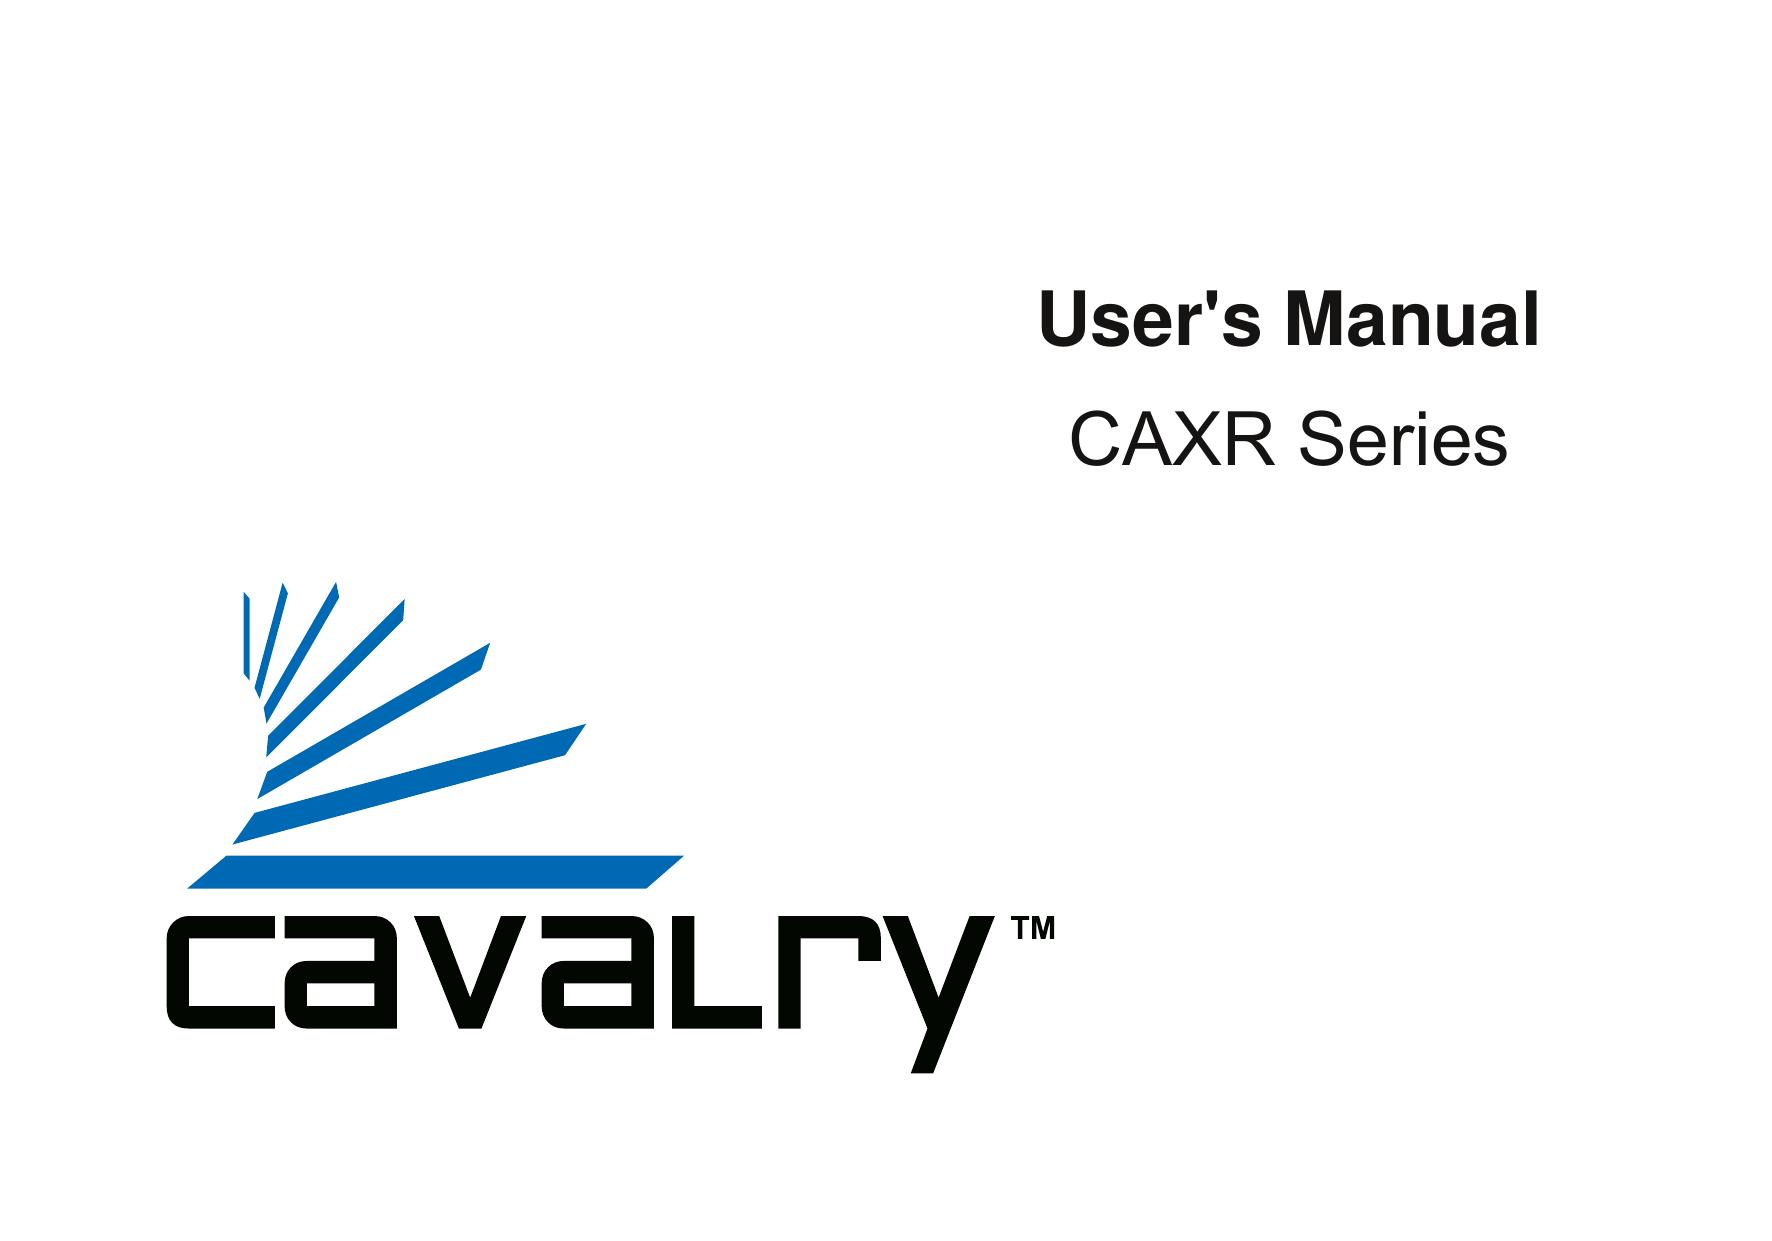 Cavalry Storage CAXR SERIES Washer/Dryer User Manual